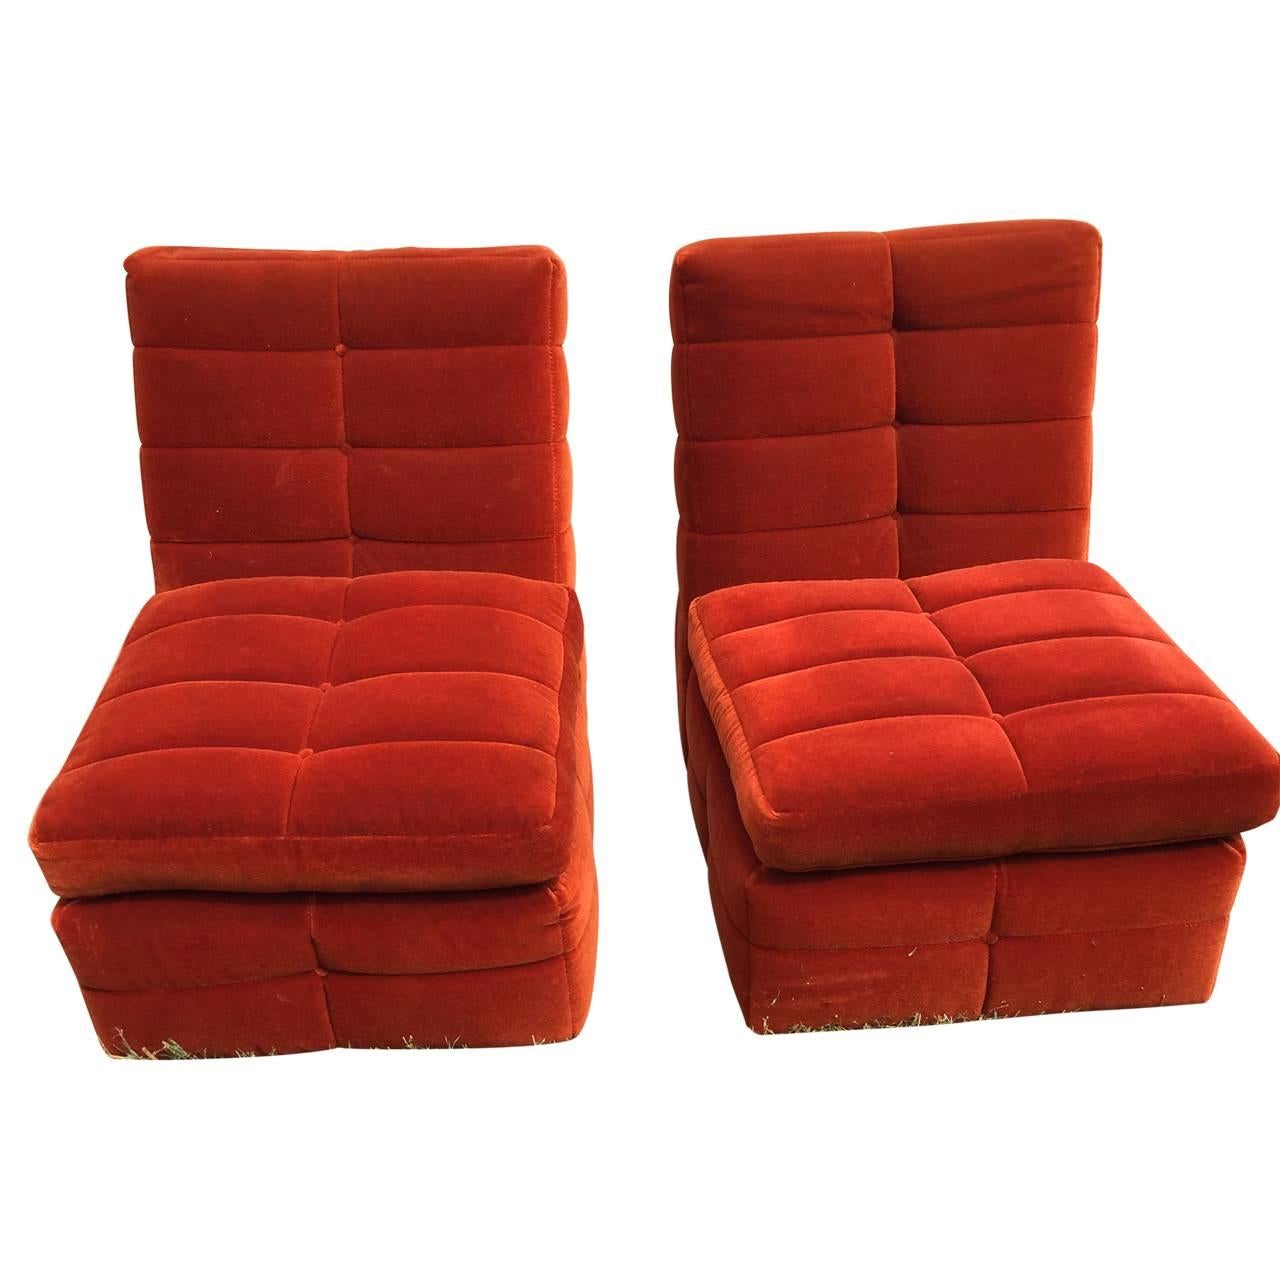 Pair of orange Milo Baughman lounge chairs.